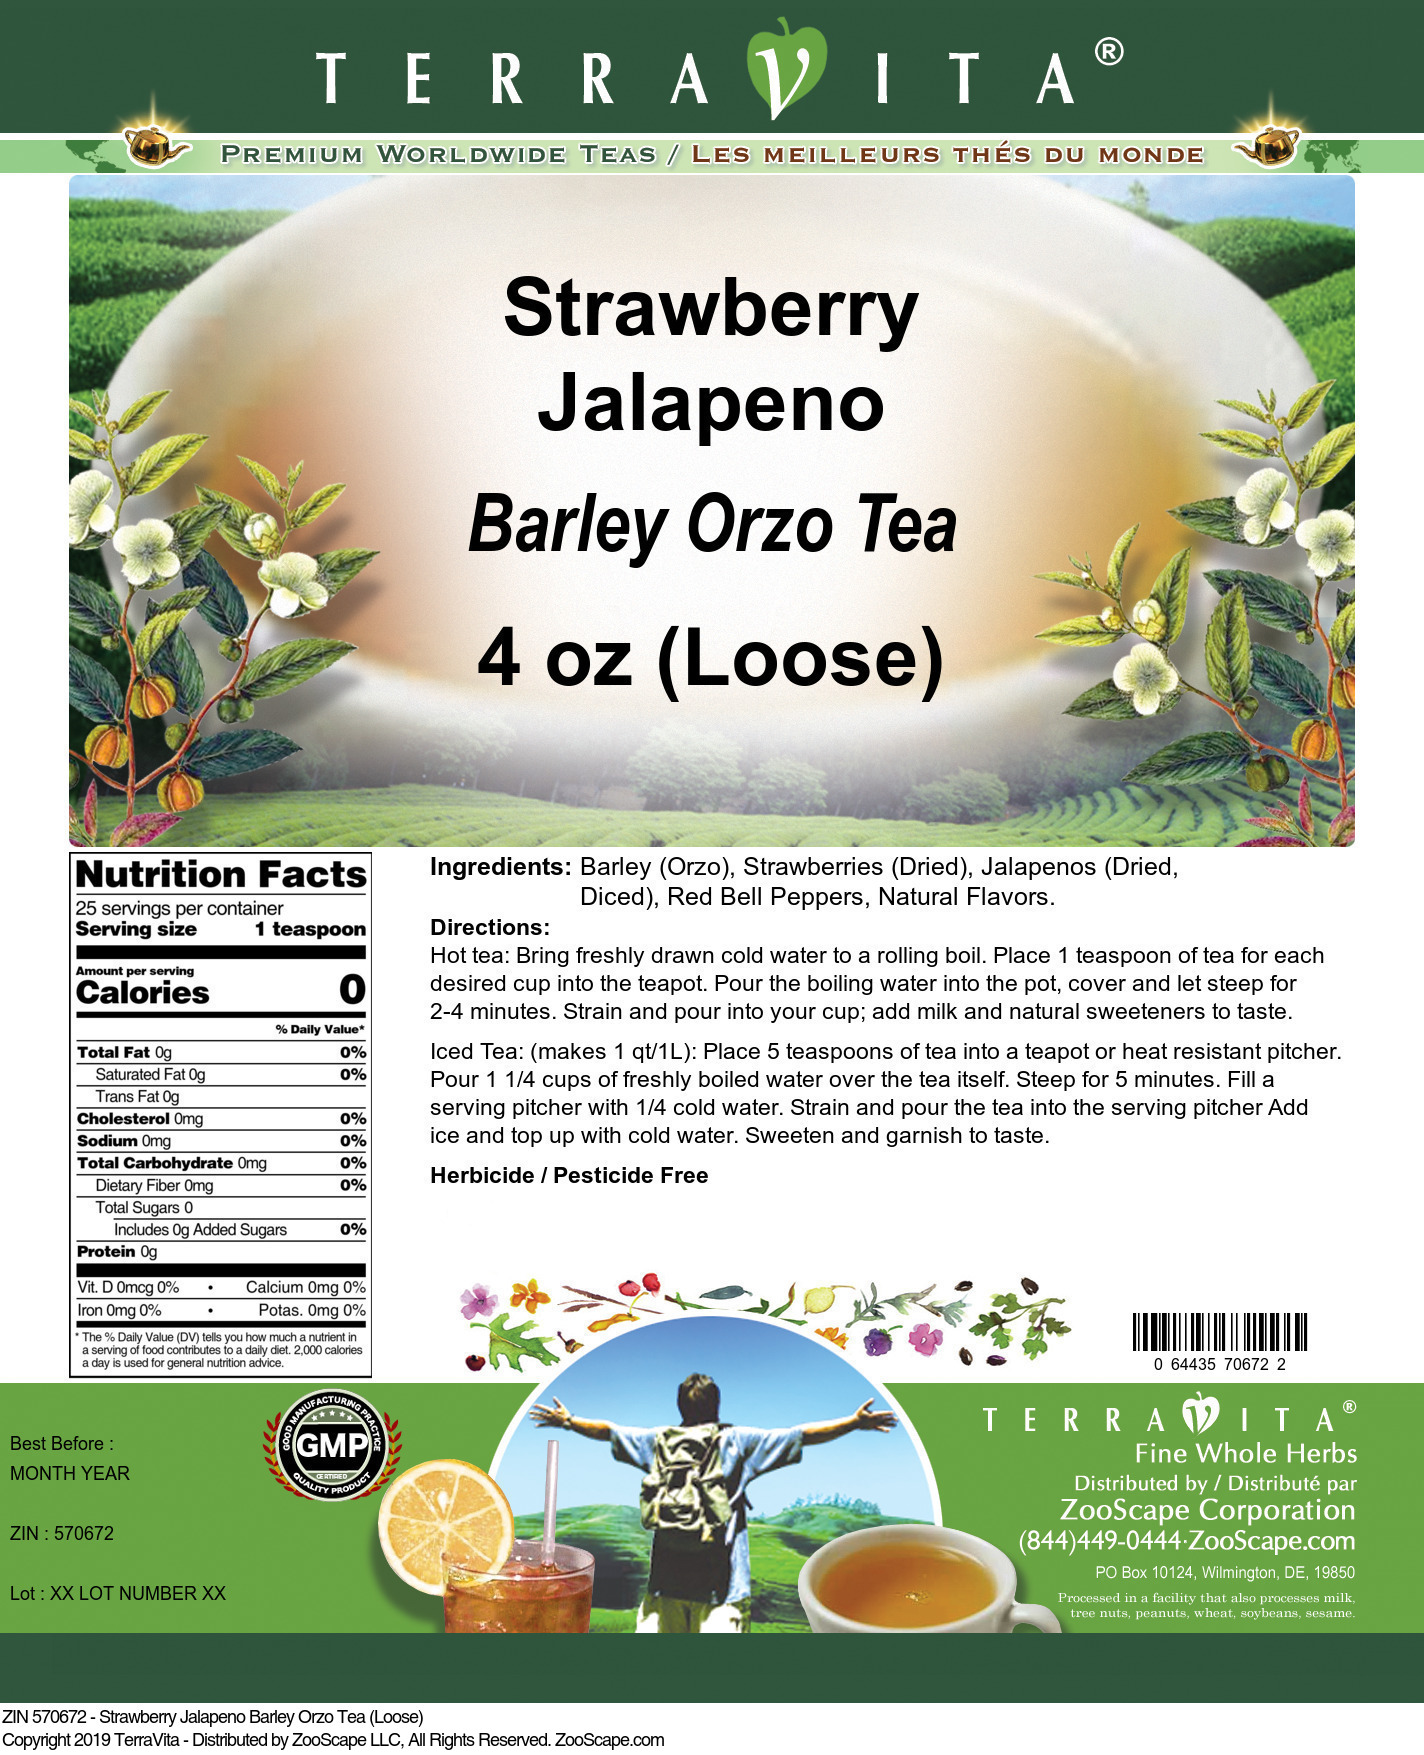 Strawberry Jalapeno Barley Orzo Tea (Loose) - Label